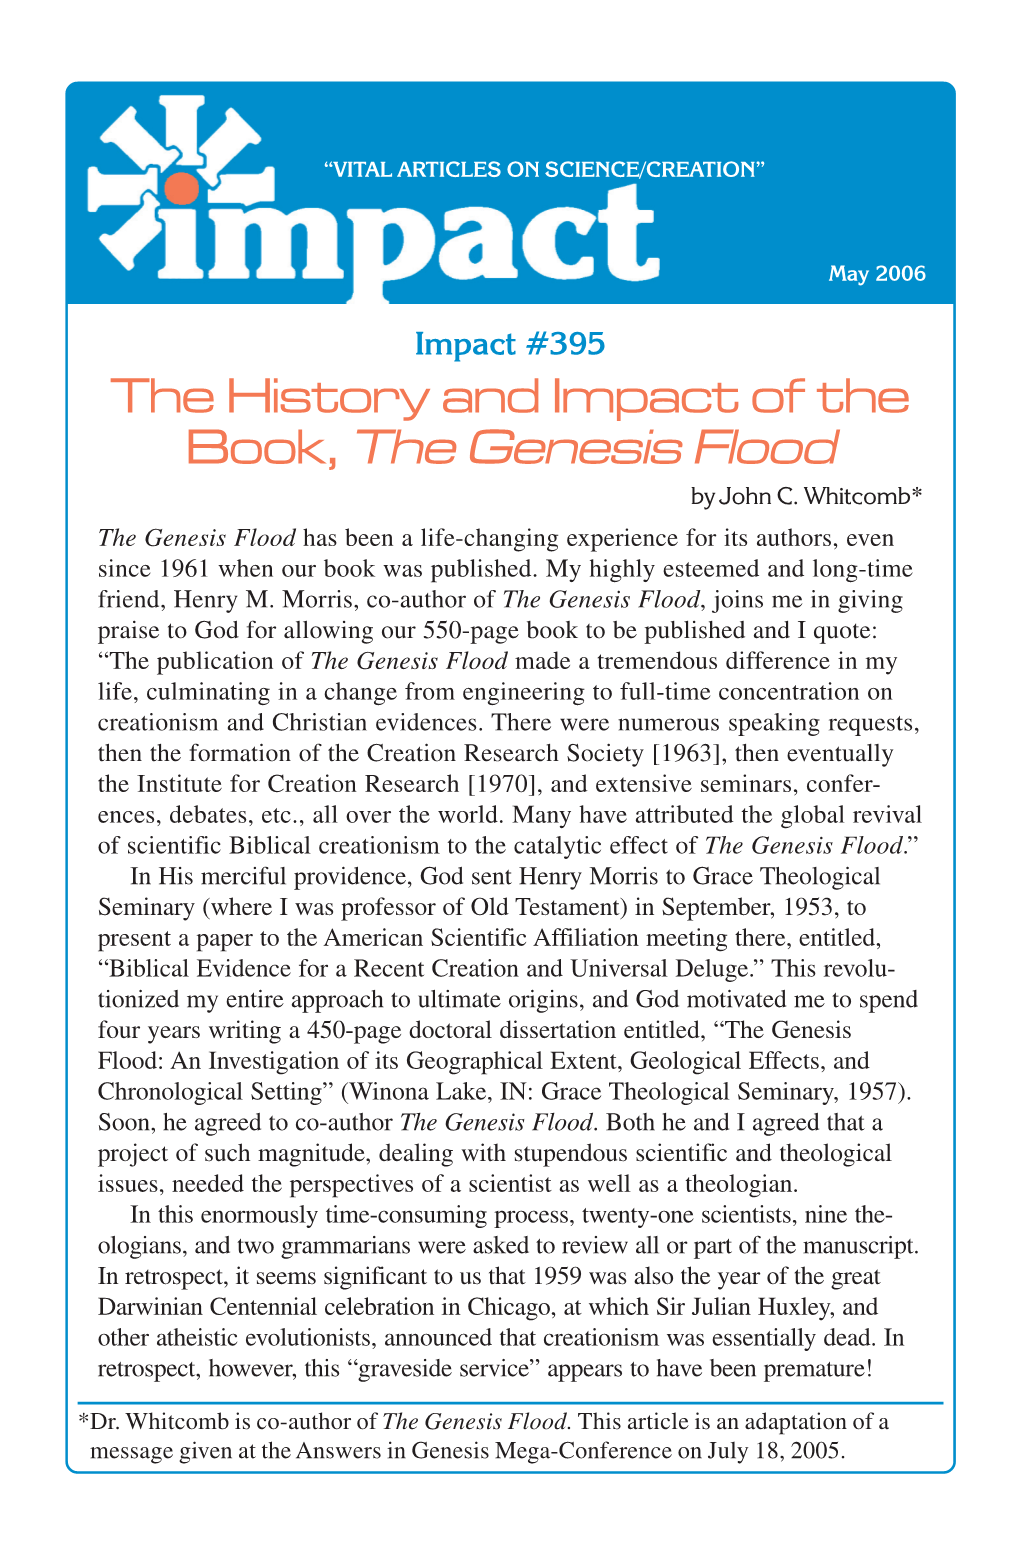 The Genesis Flood by John C